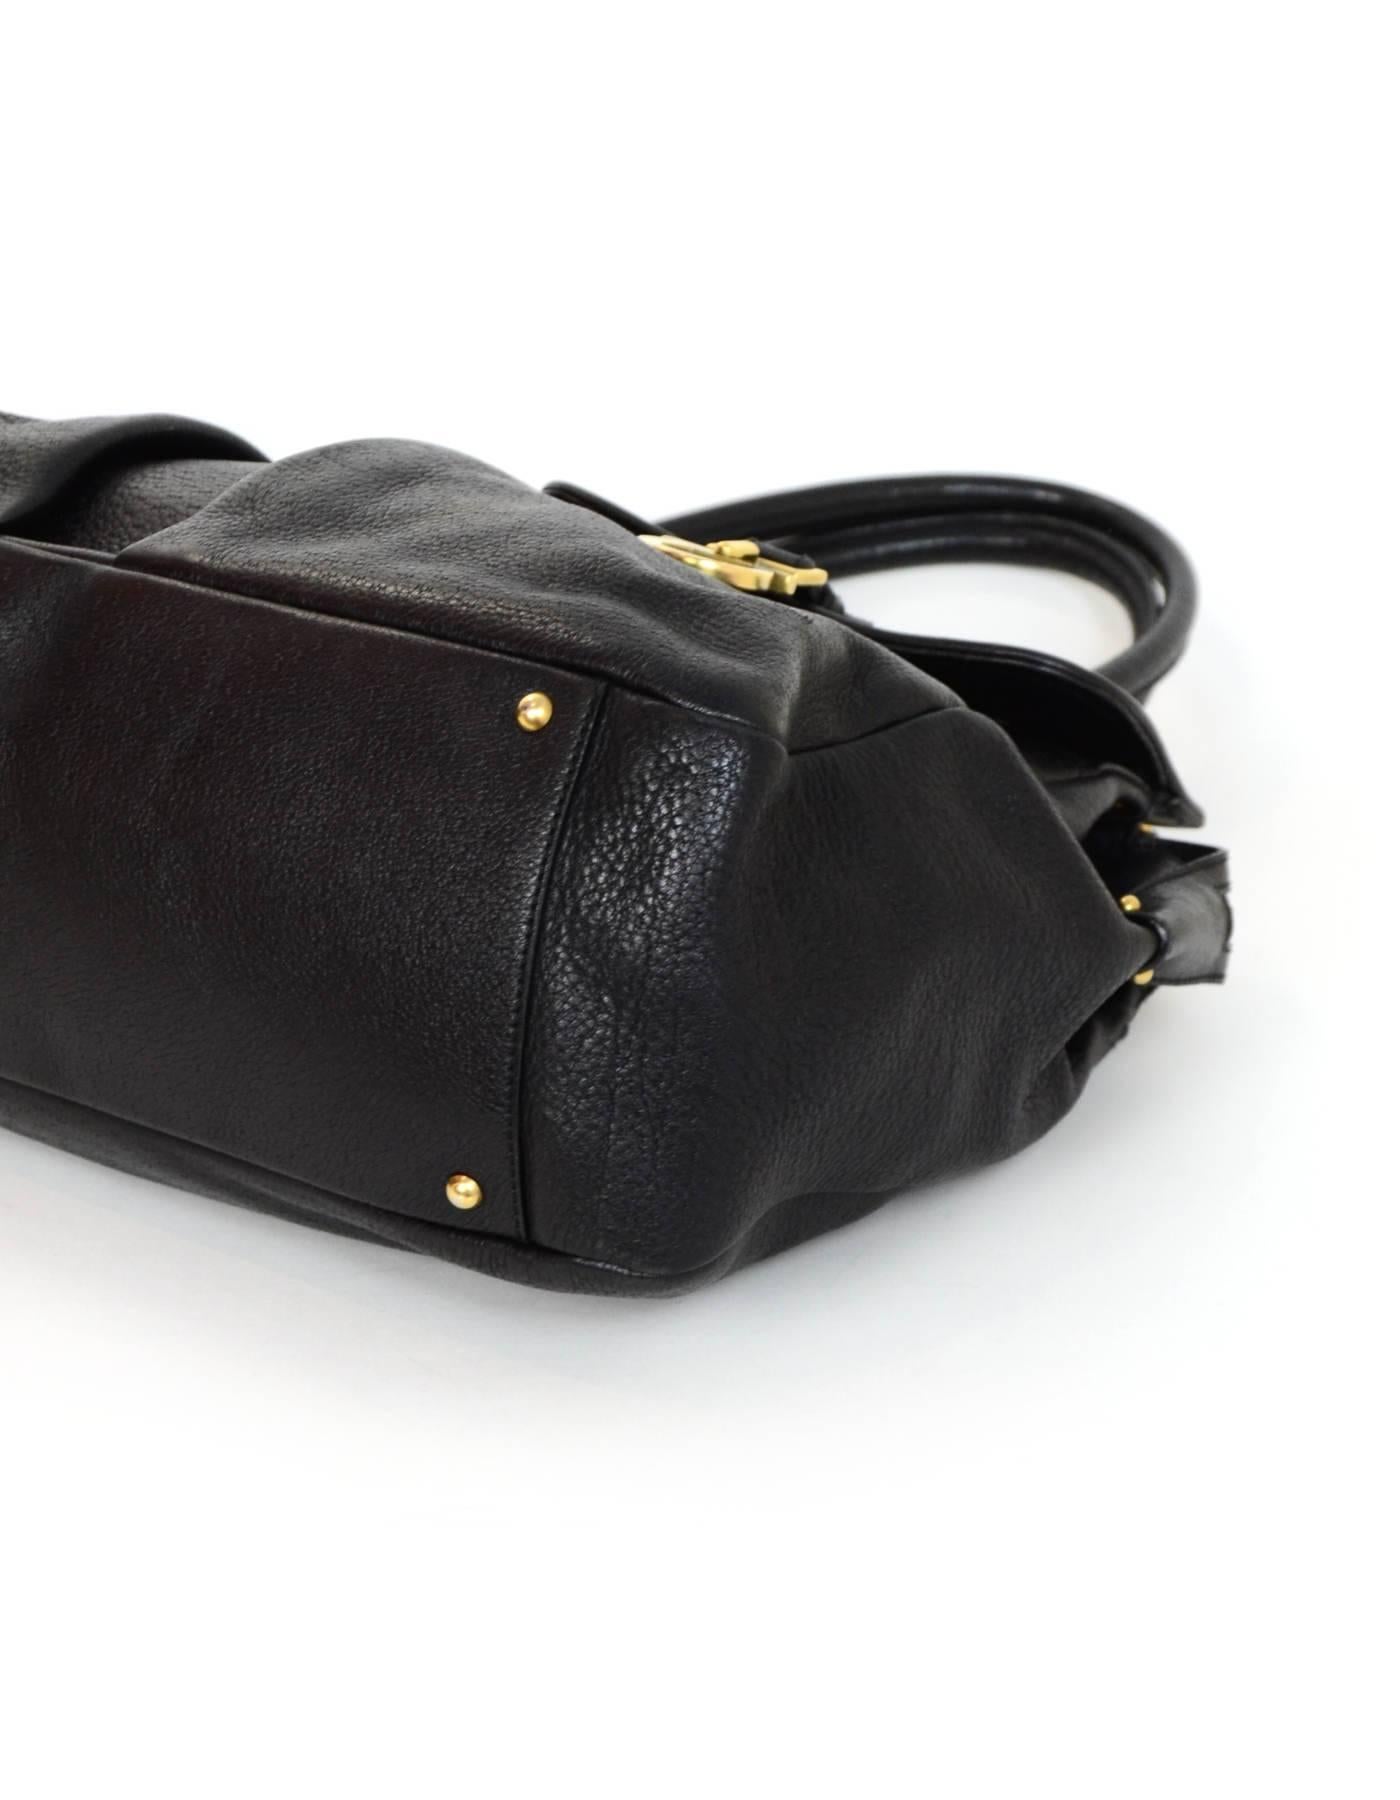 Salvatore Ferragamo Black Leather Double Pocket Satchel Bag 1